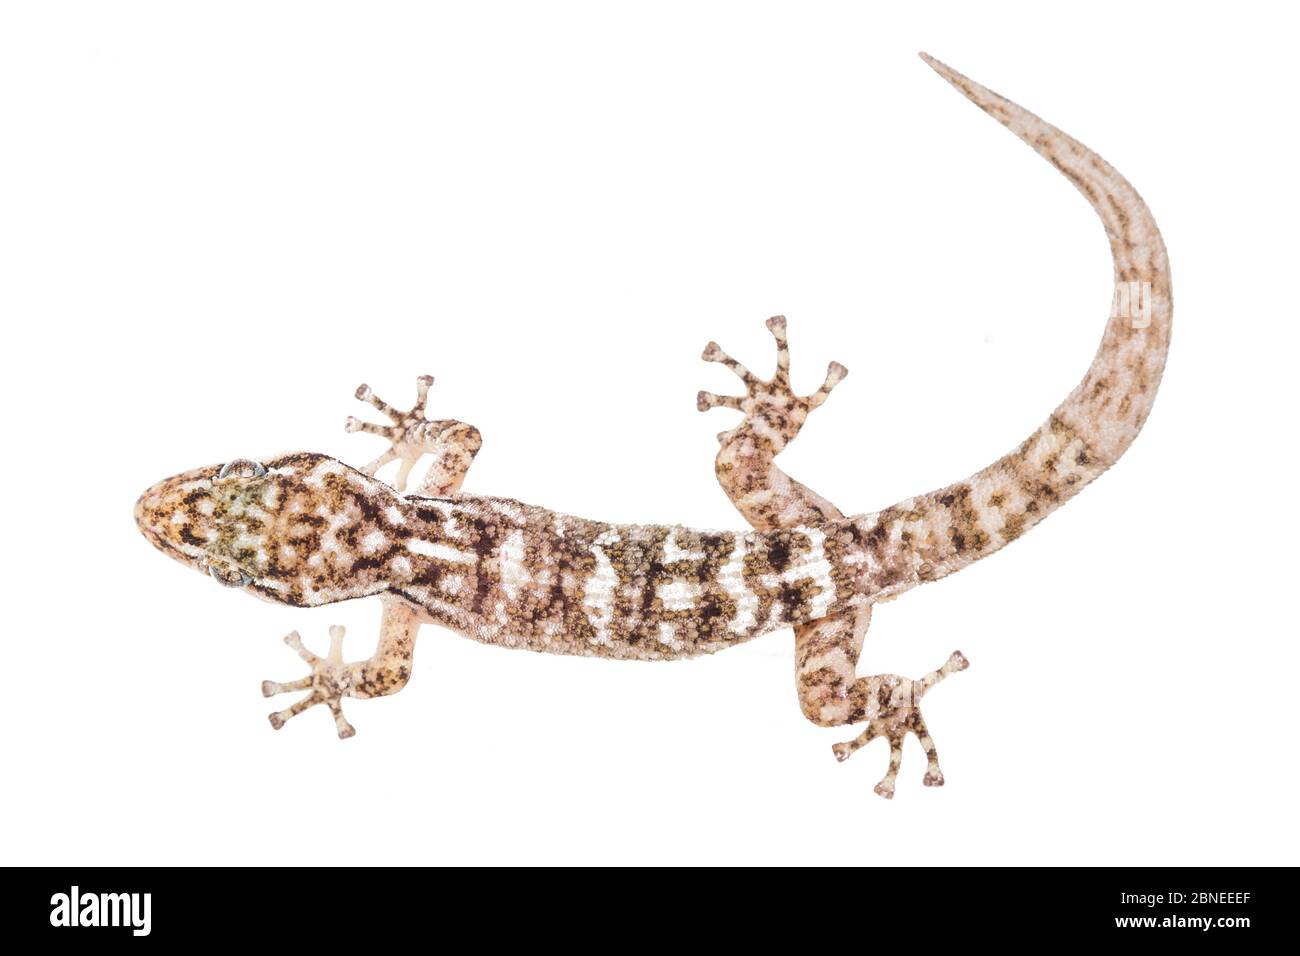 House gecko (Phyllodactylus sp.) Cerro Seco, Bahia de Caraquez, Ecuador. Meetyourneighbours.net project Stock Photo